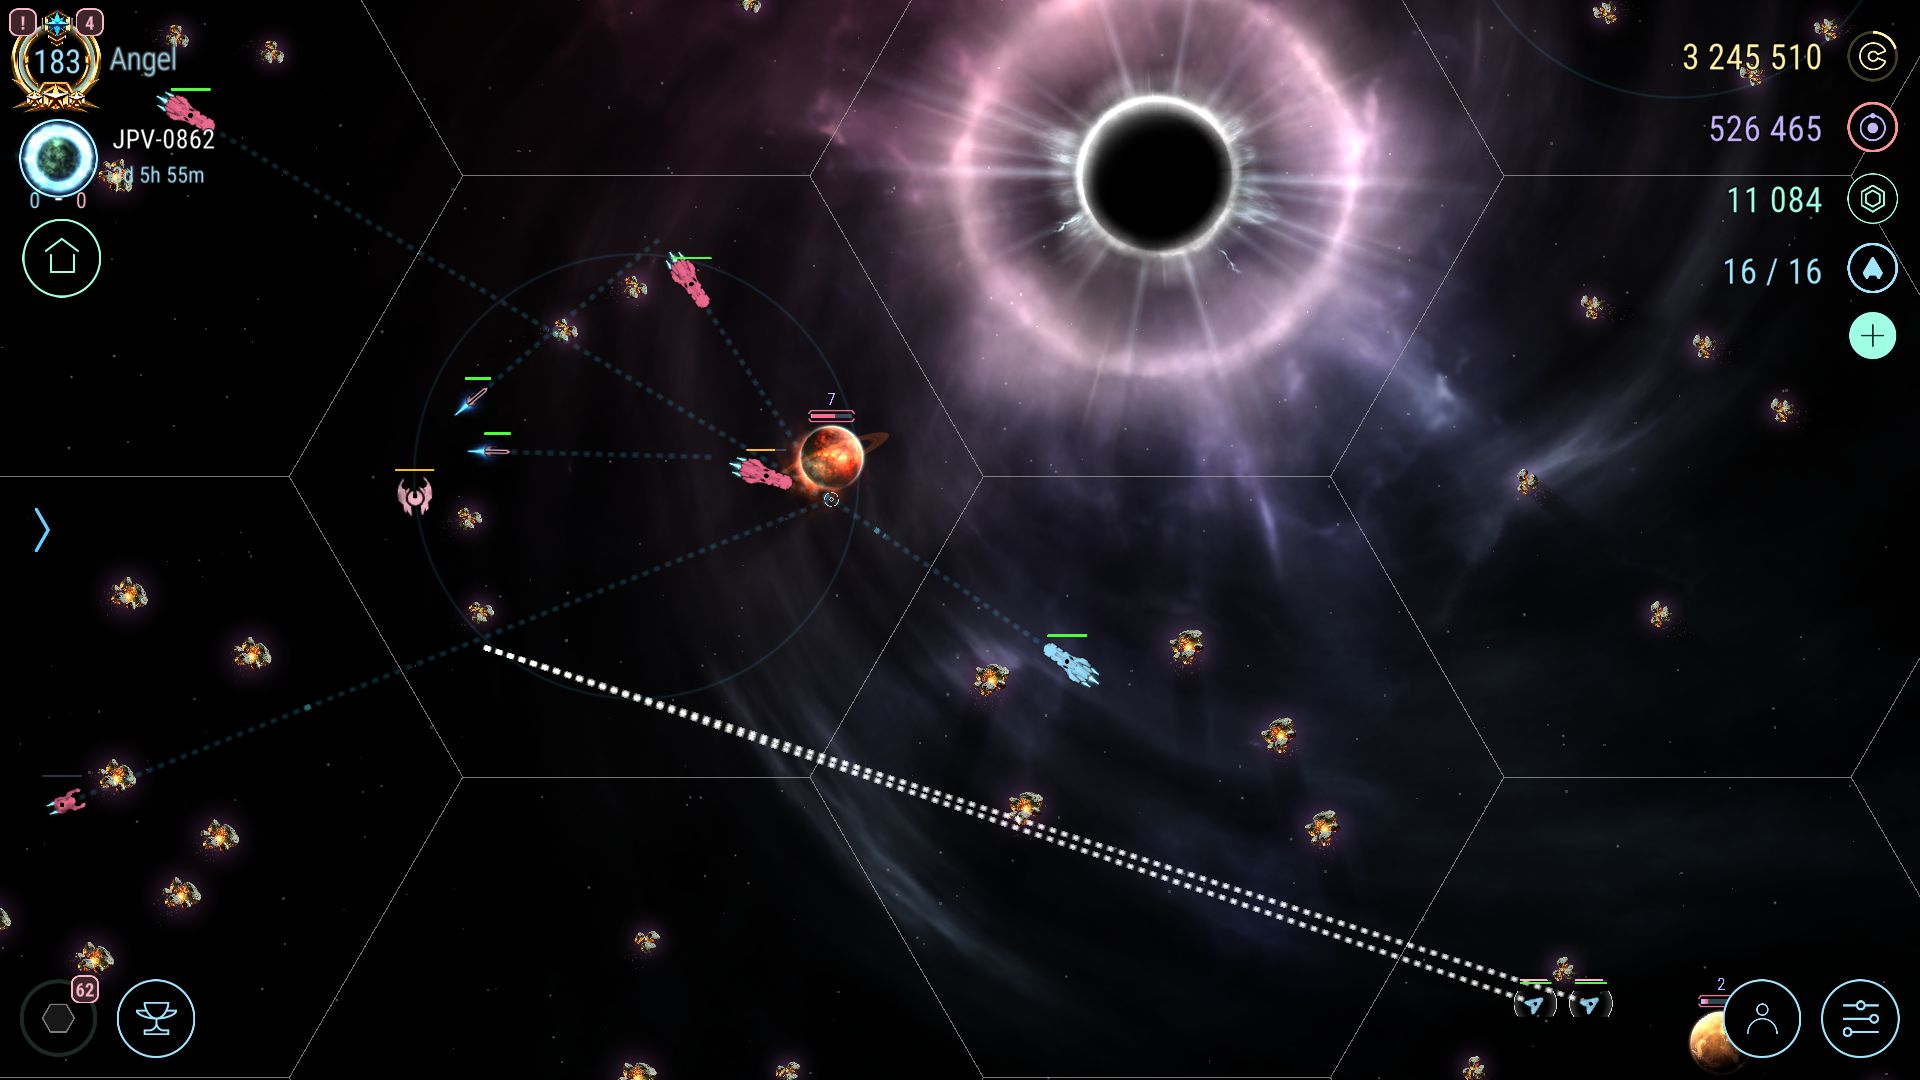 Hades' Star: DARK NEBULA - Android game screenshots.